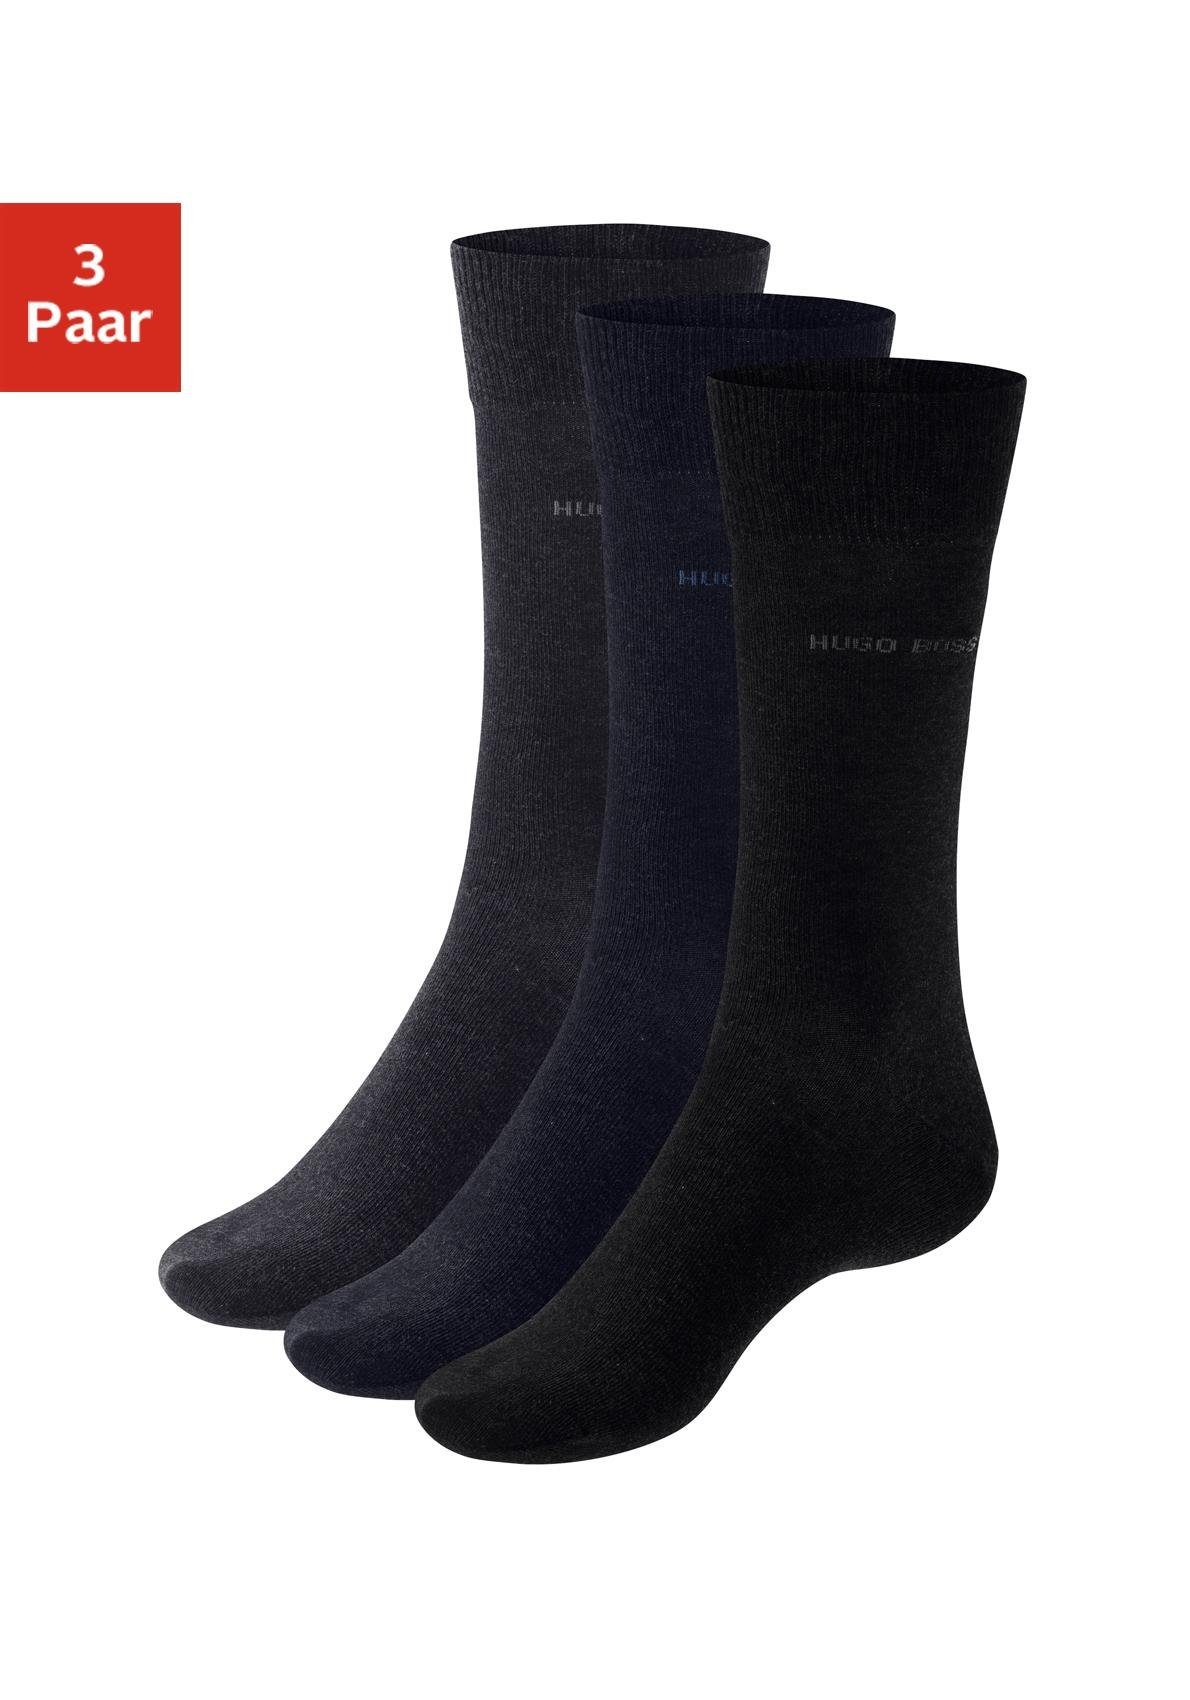 BOSS Socken 3P RS Uni (3-Paar) schwarz, anthrazit, marine